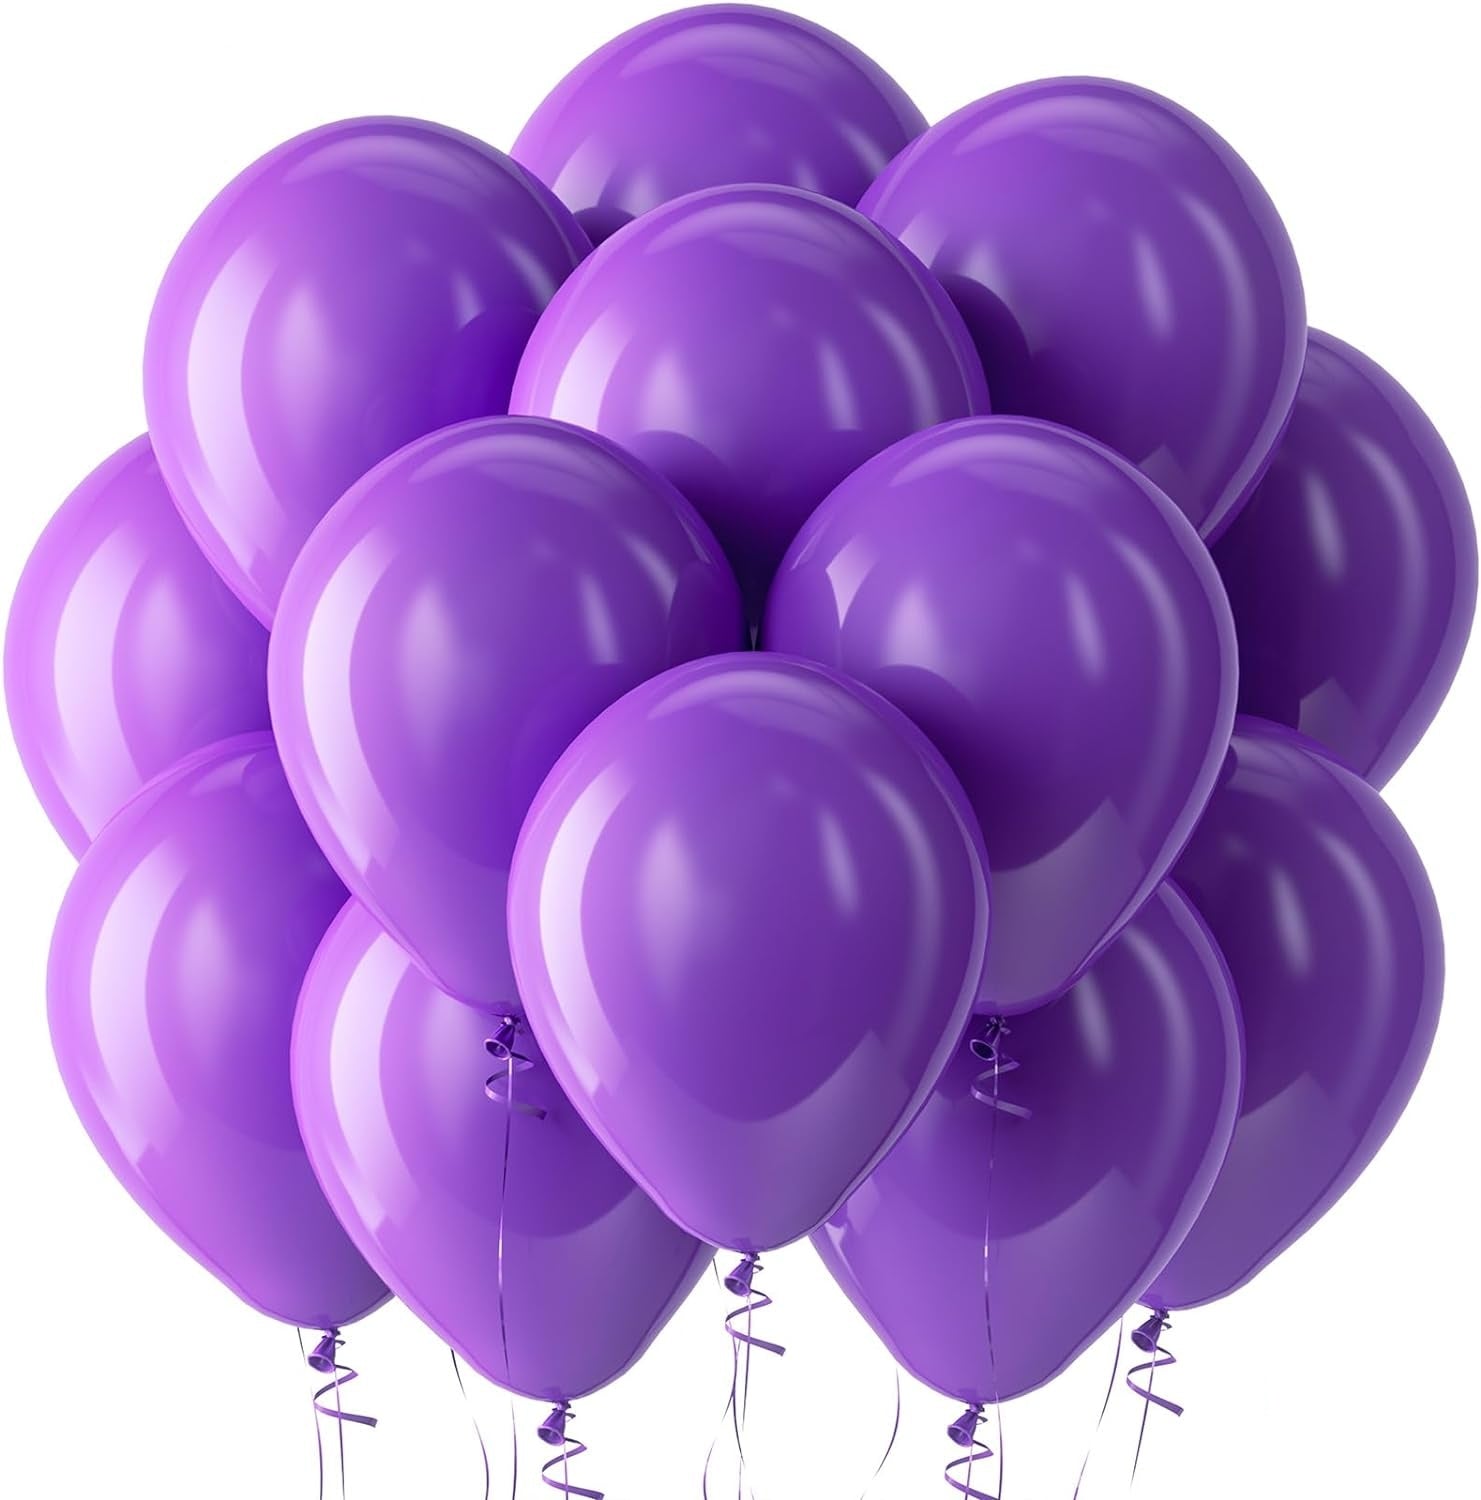 12 Inch Chrome Balloons